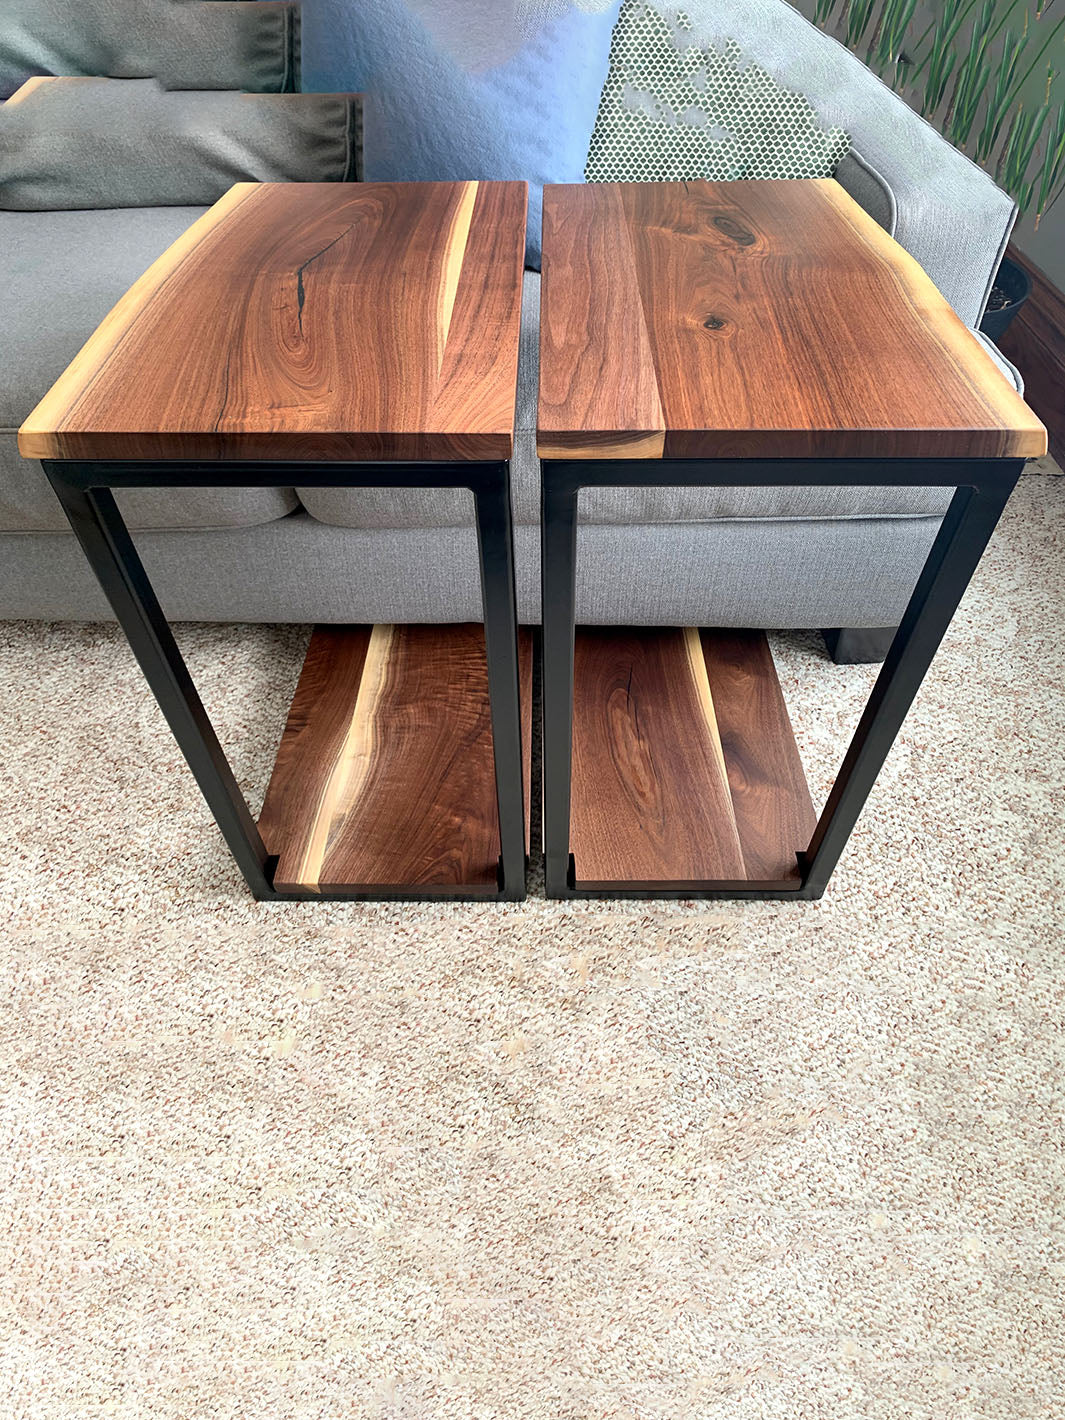 Floor Shelf Live Edge Walnut Wood C Table Earthly Comfort Side Tables 1439-3